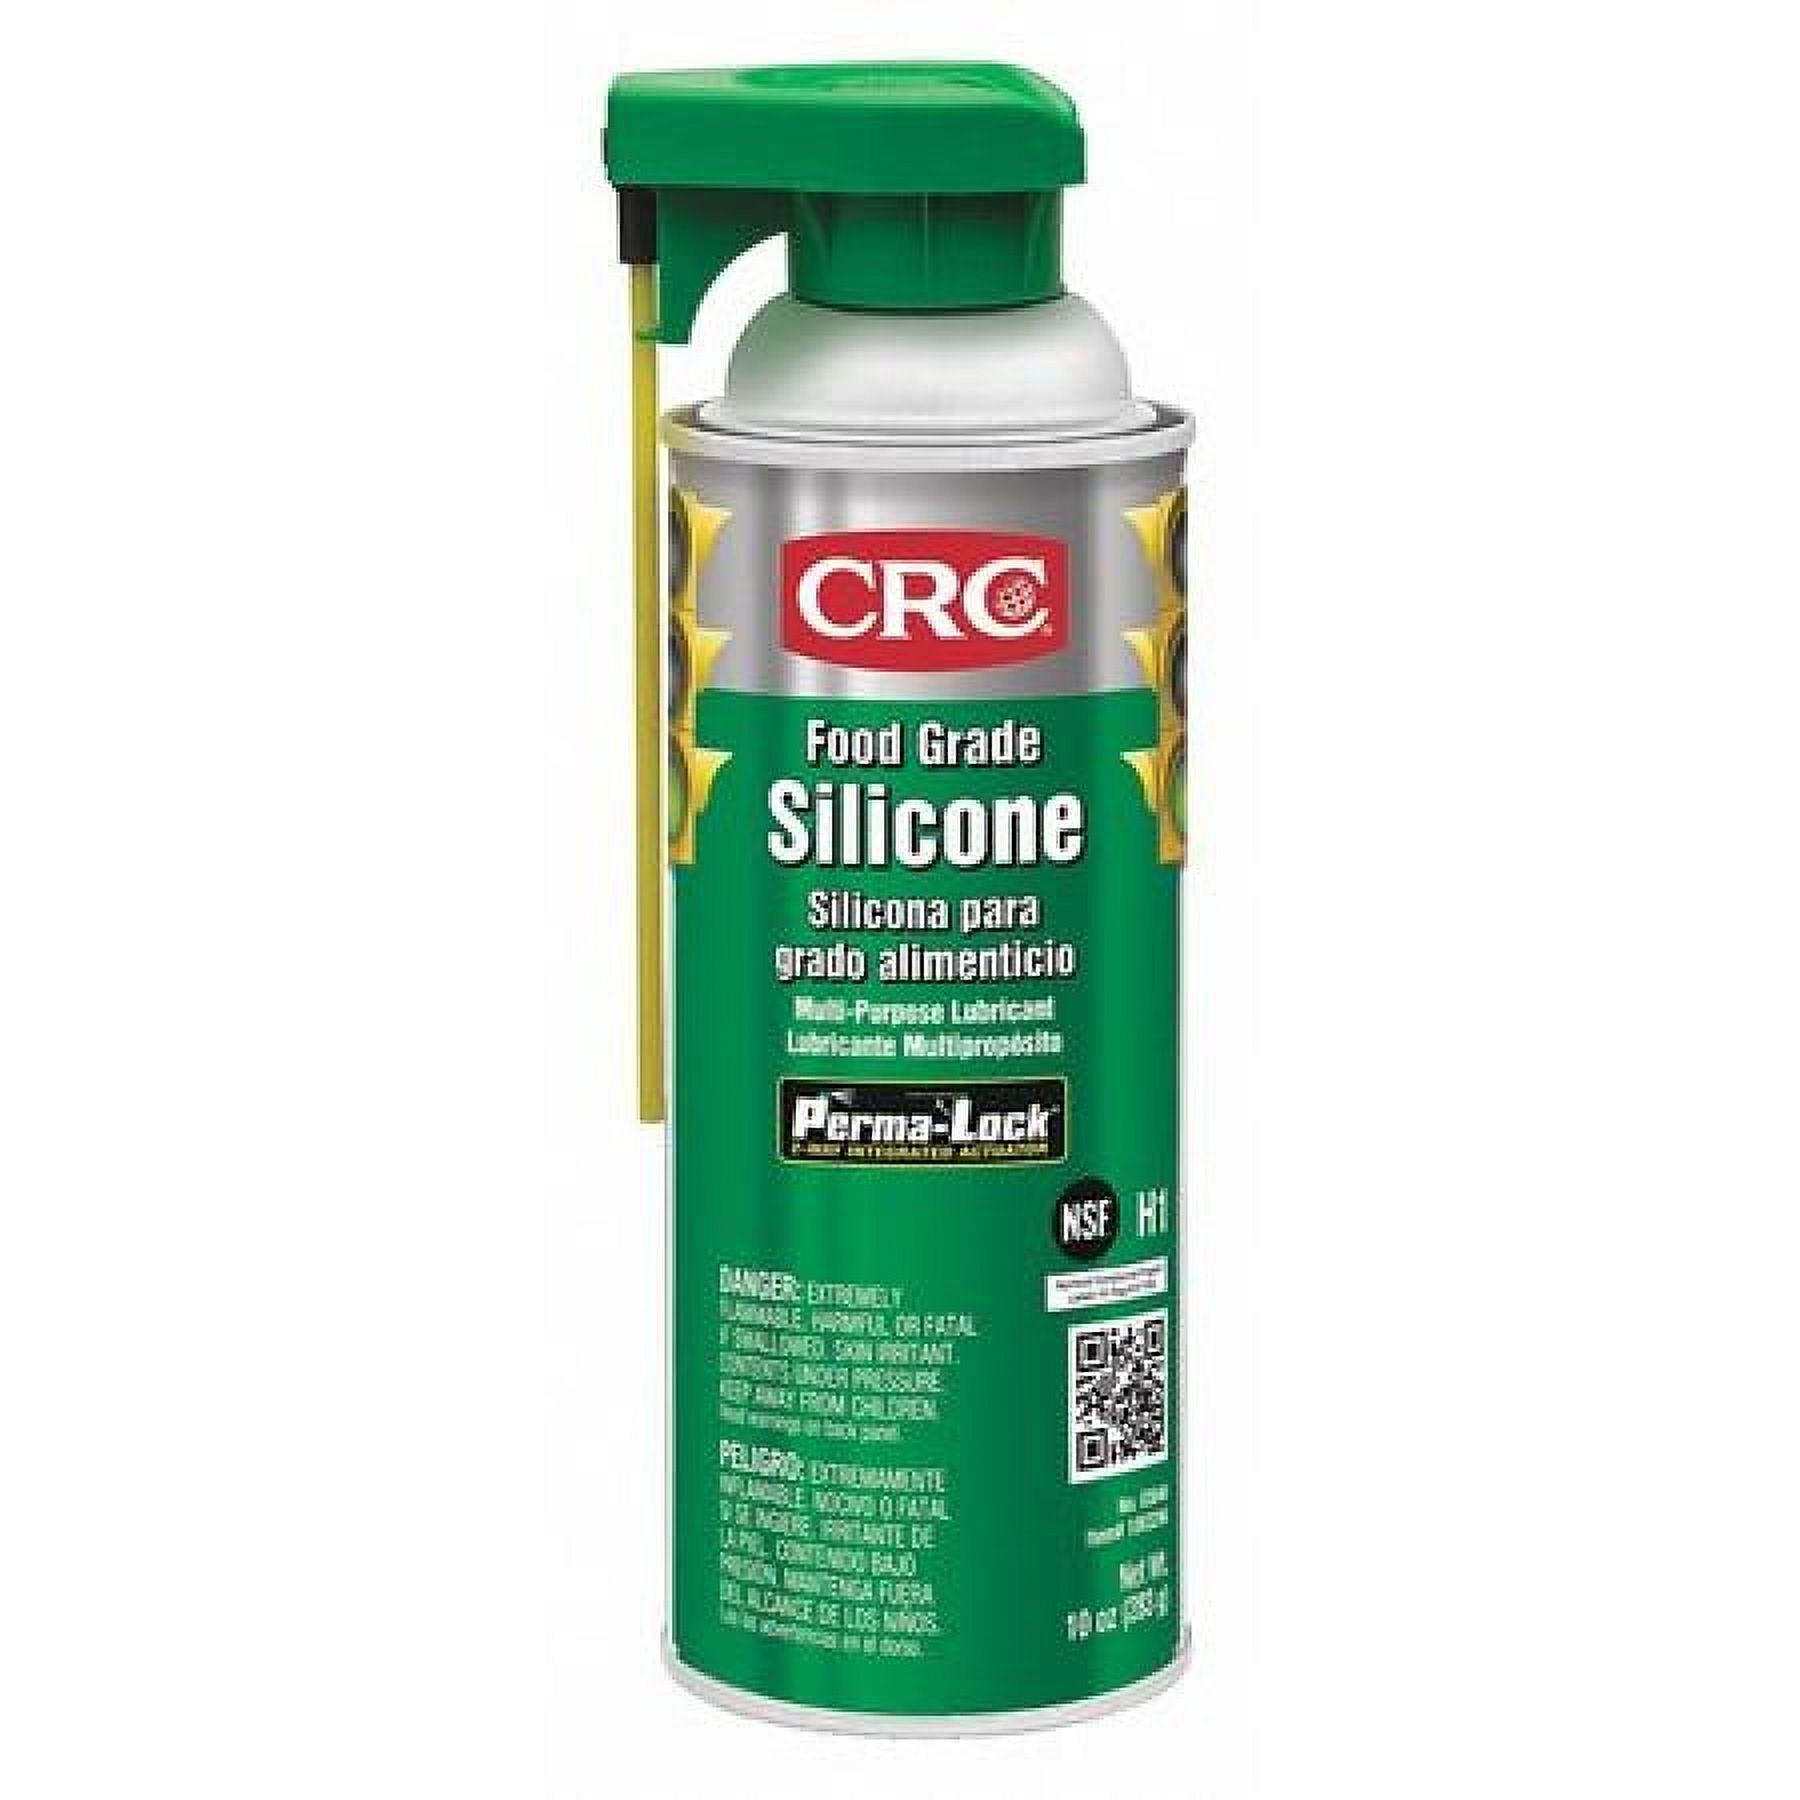 CRC Food Grade Silicone Lubricants, 16-oz. Aerosol Can - 12 CAN (125-03040) - image 1 of 2